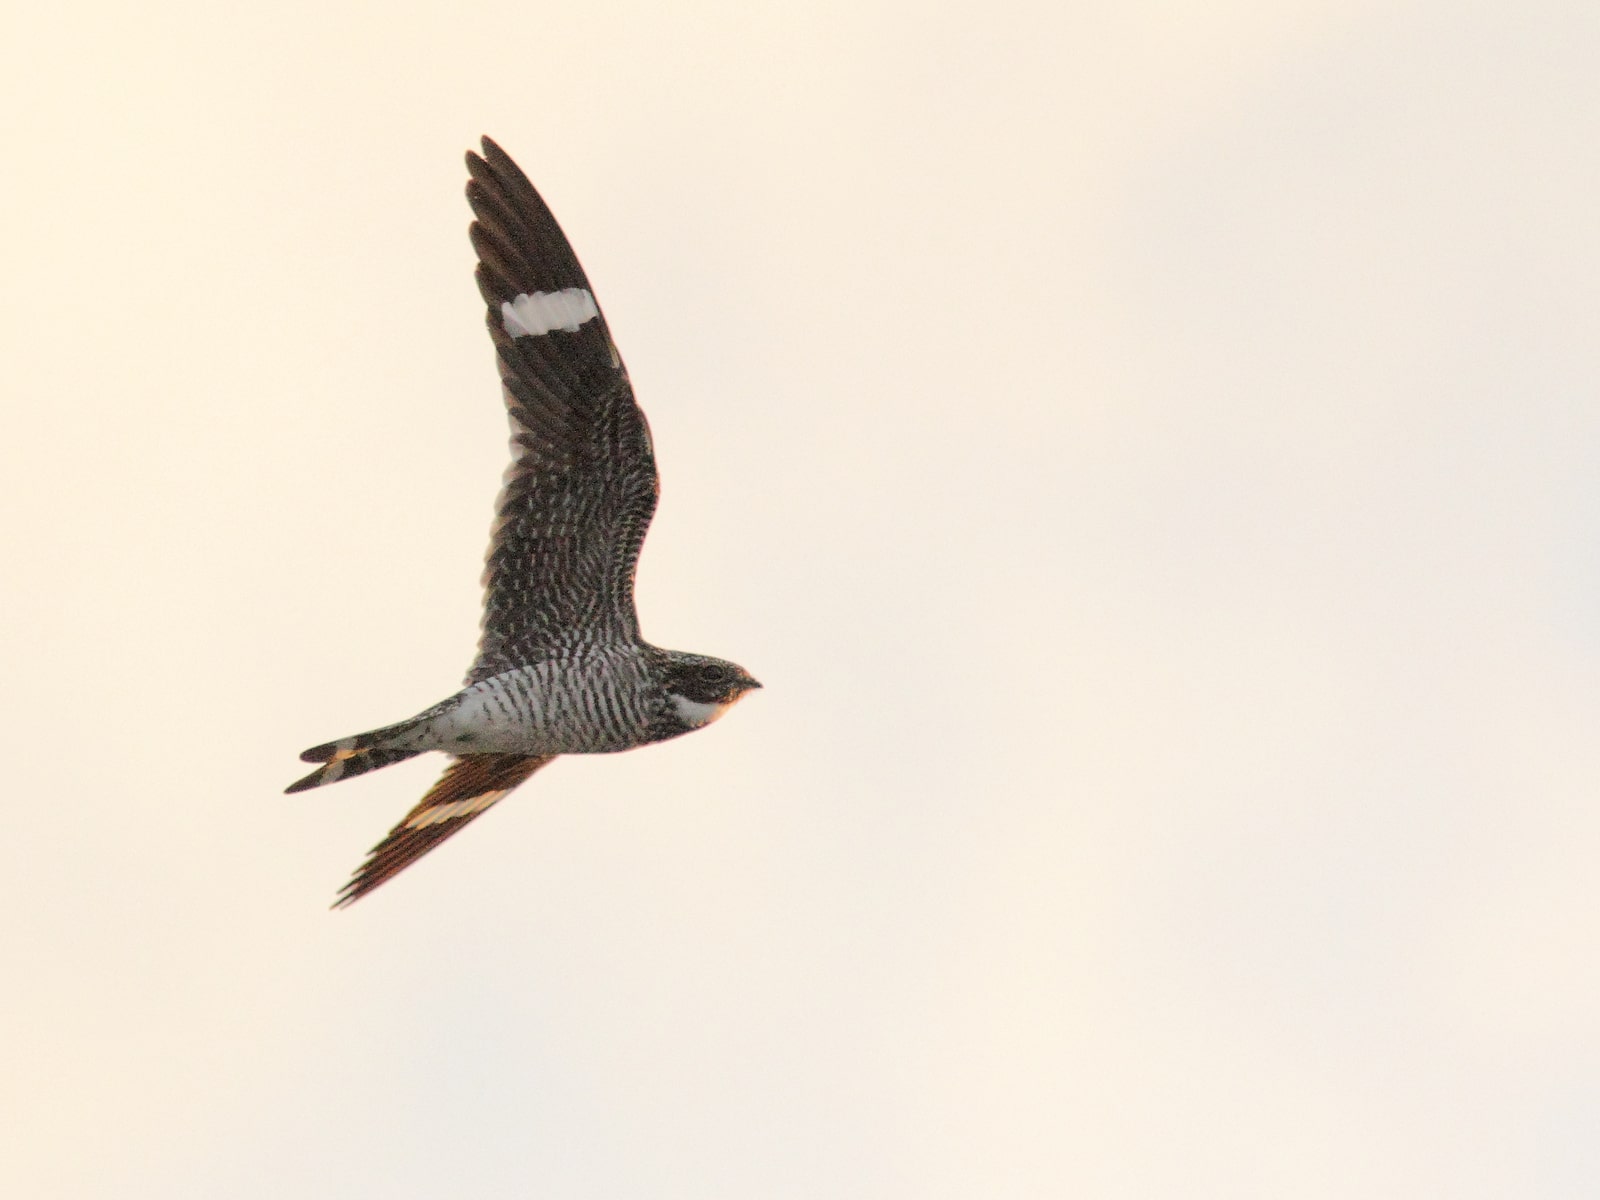 A nighthawk flies in twilight skies. (photo © Kenneth Cole Schneider)